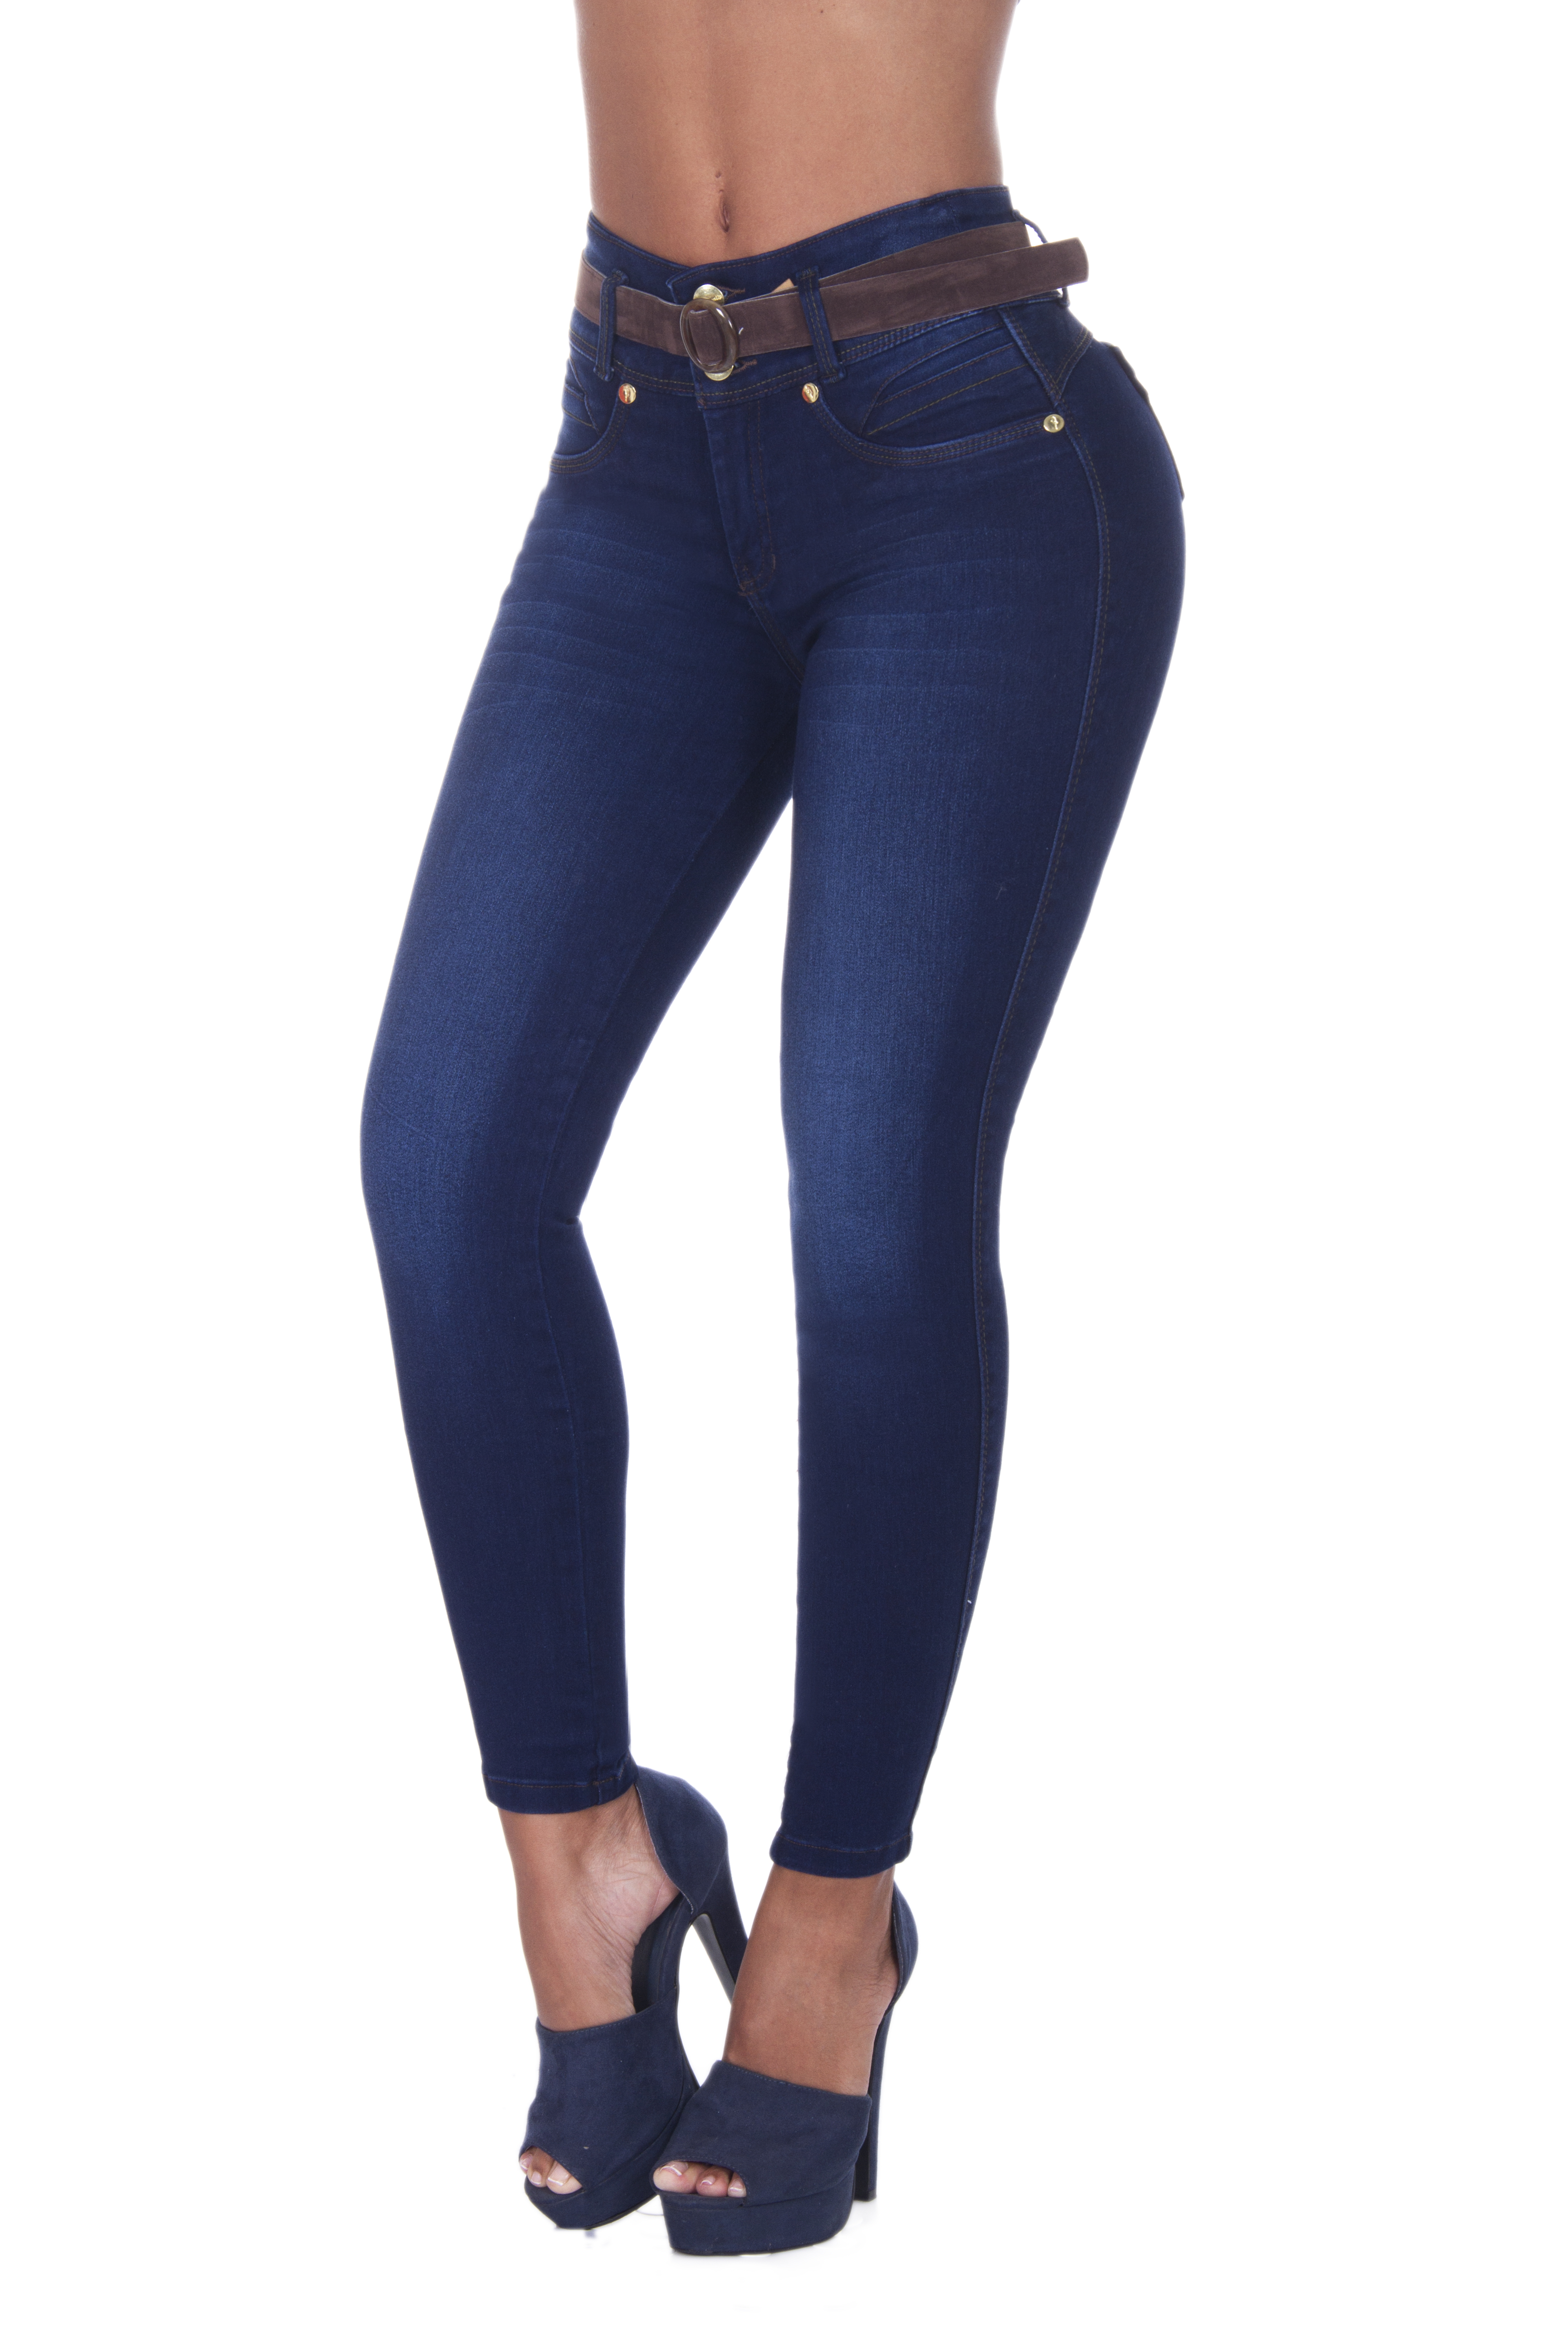 High Rise Denim Skinny Colombian Jeans for Women